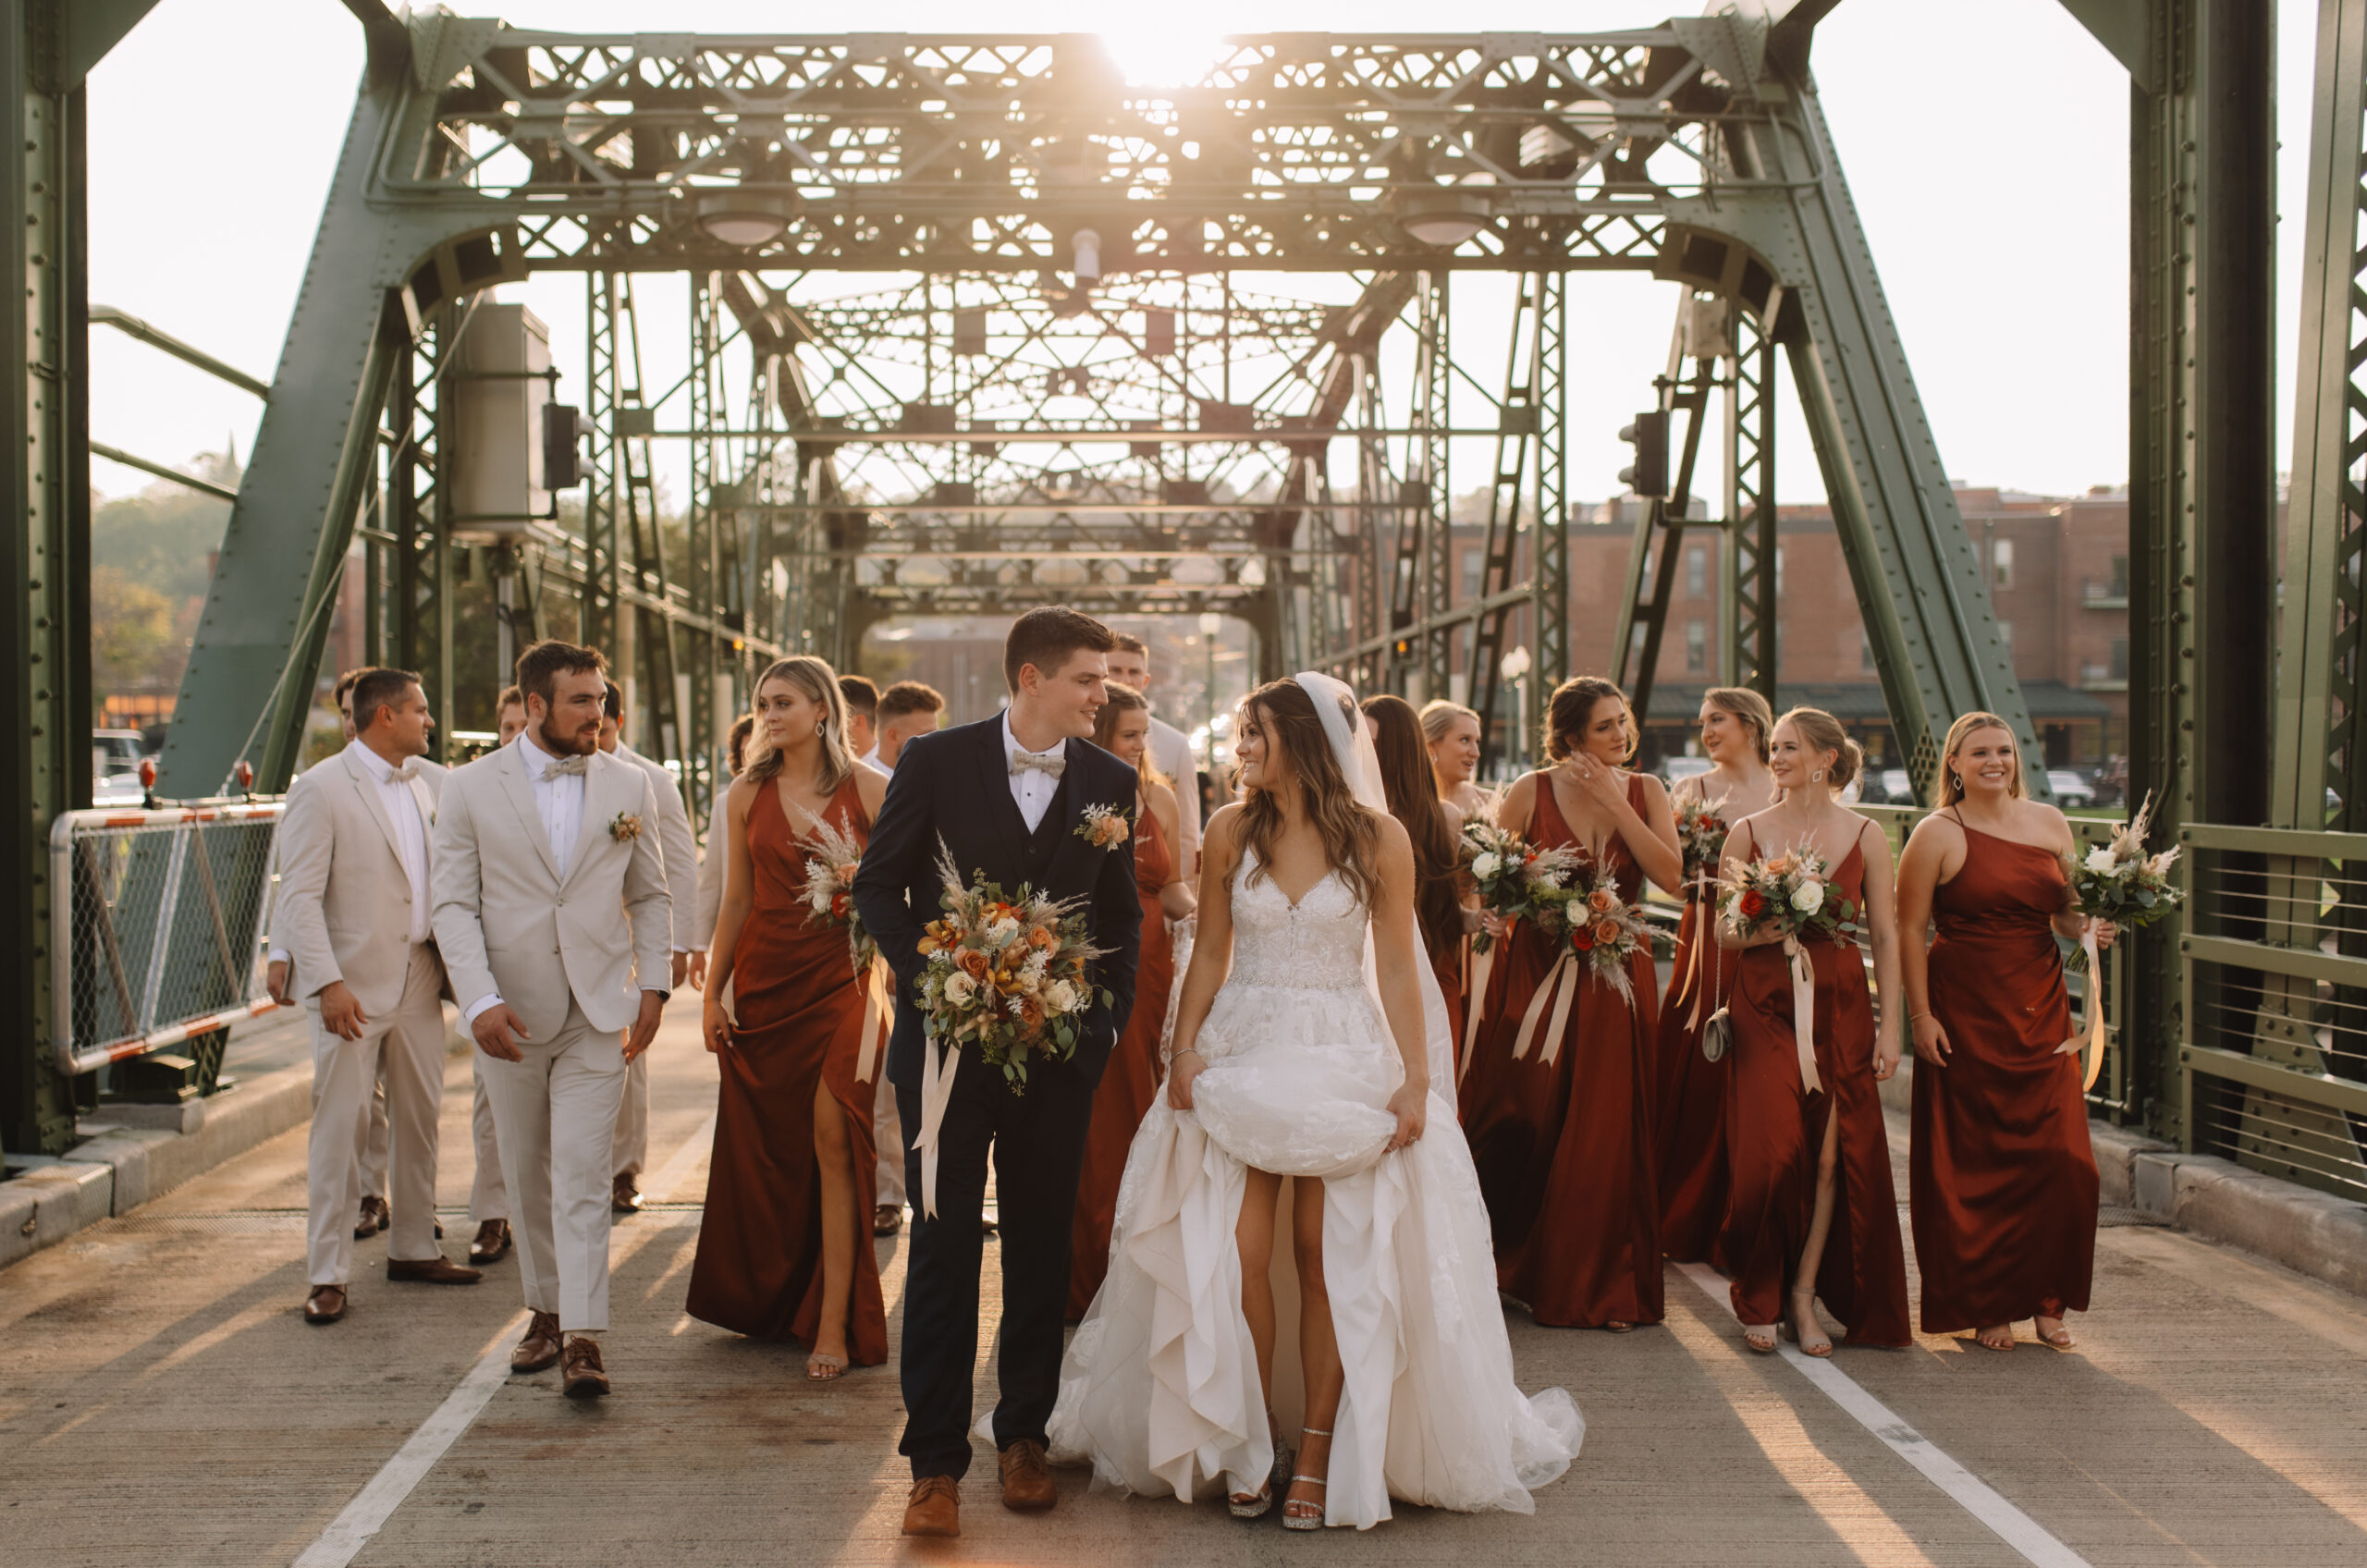 Wedding Party Fun group photos on the Stillwater bridge in Minnesota